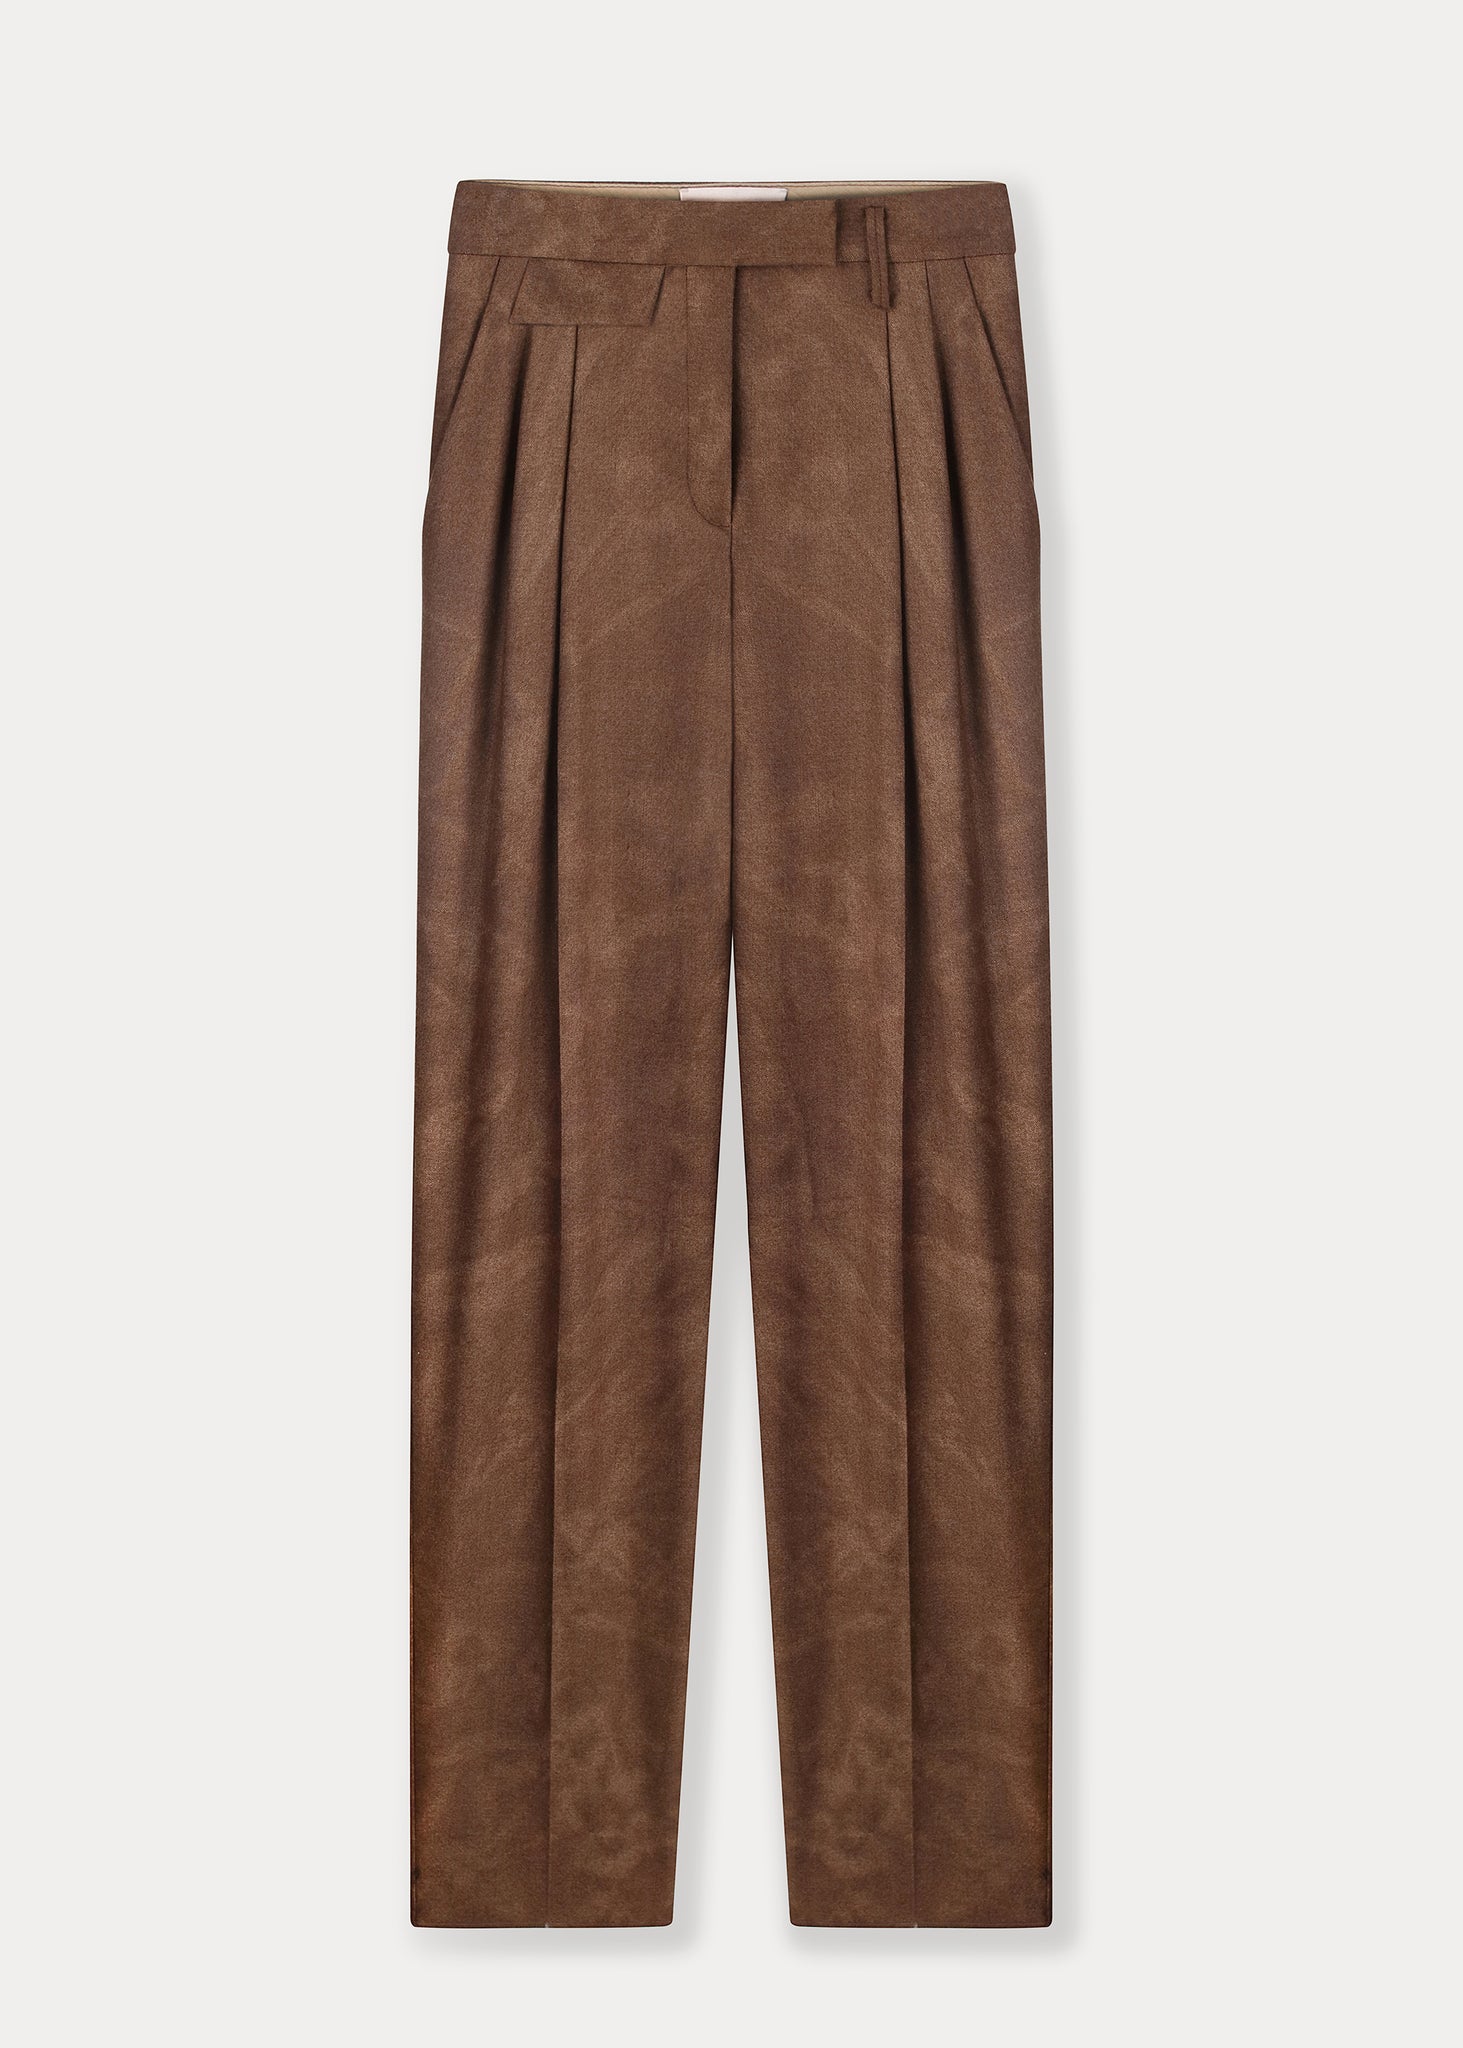 Brown Fall Pants